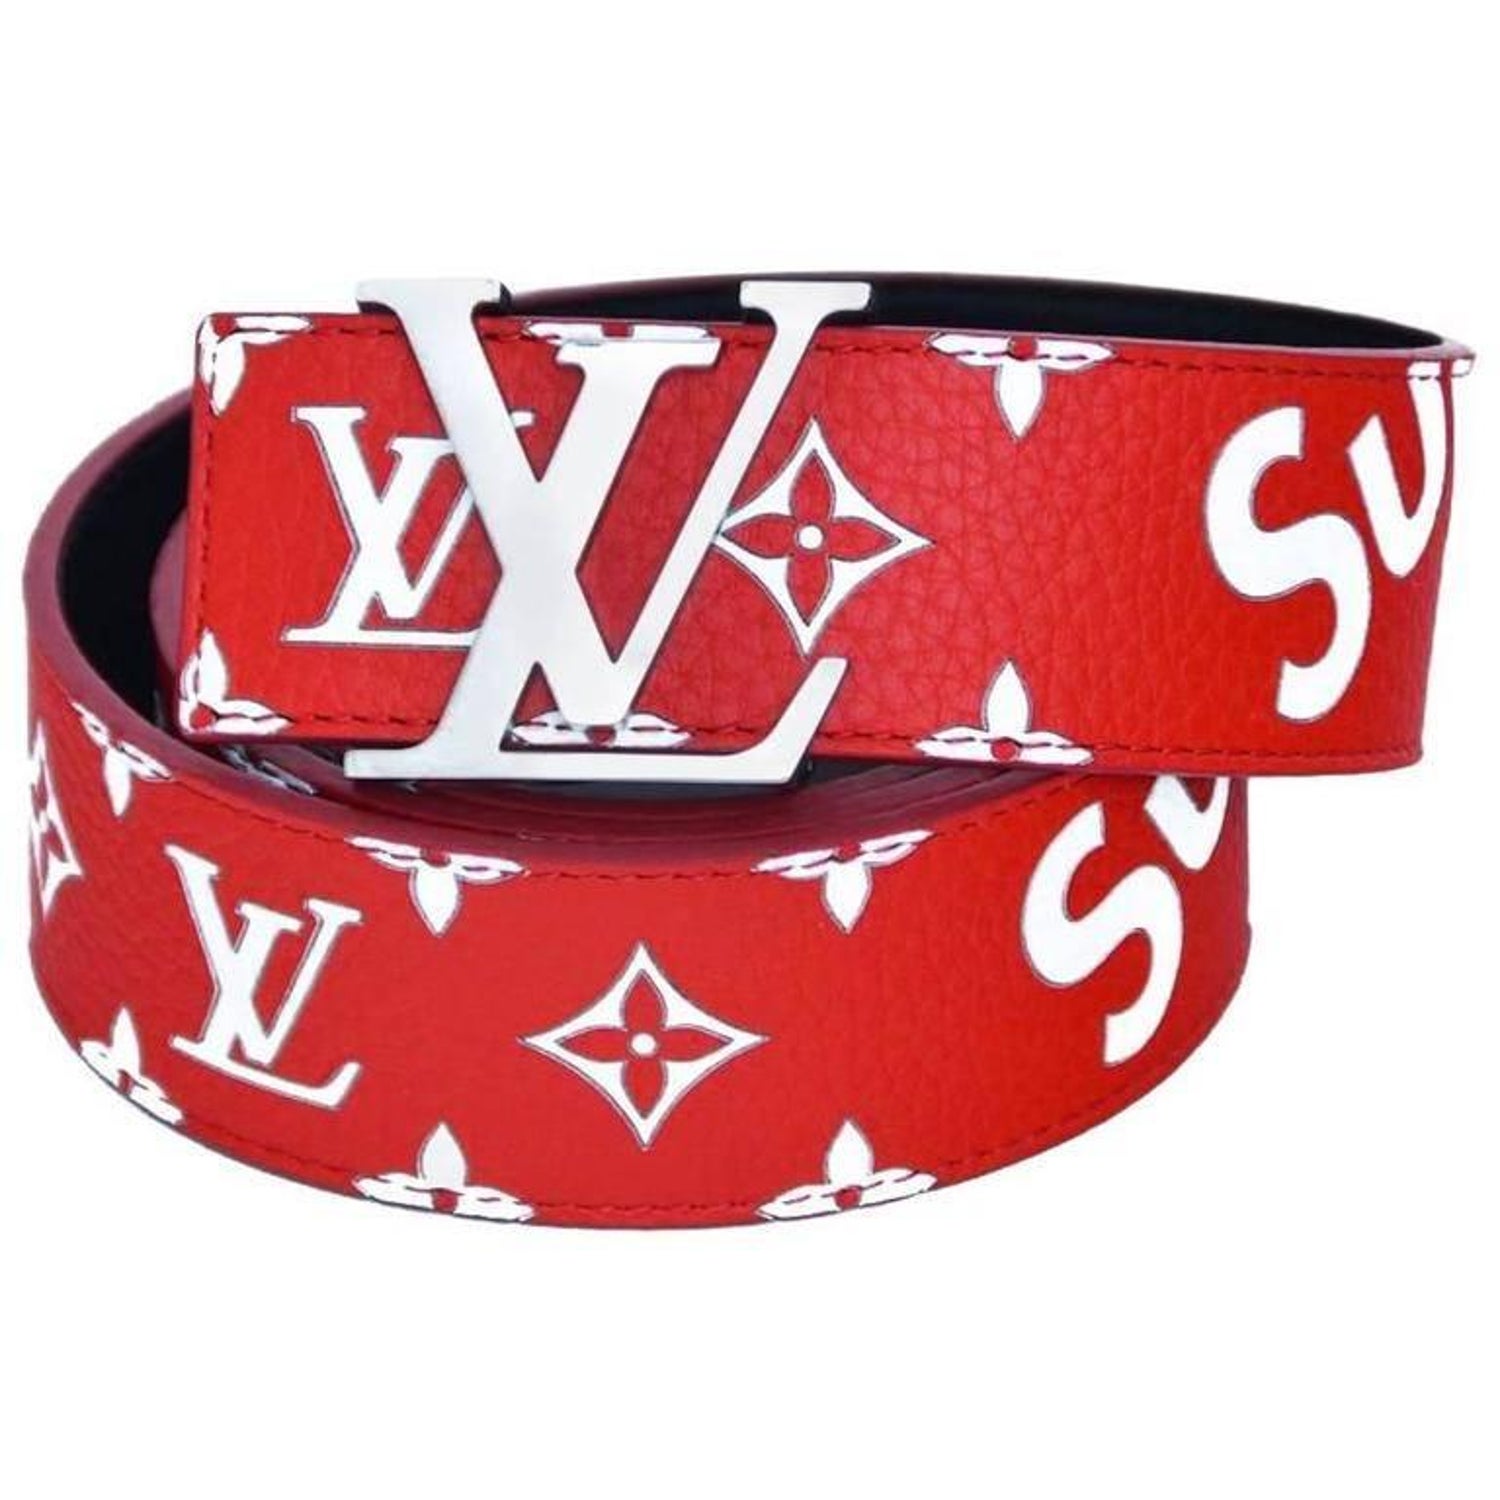 Vuitton x Supreme Red Belt Sz 95 New Receipt/Box For Sale 1stDibs | red supreme louis vuitton belt, louis vuitton x supreme belt, red supreme